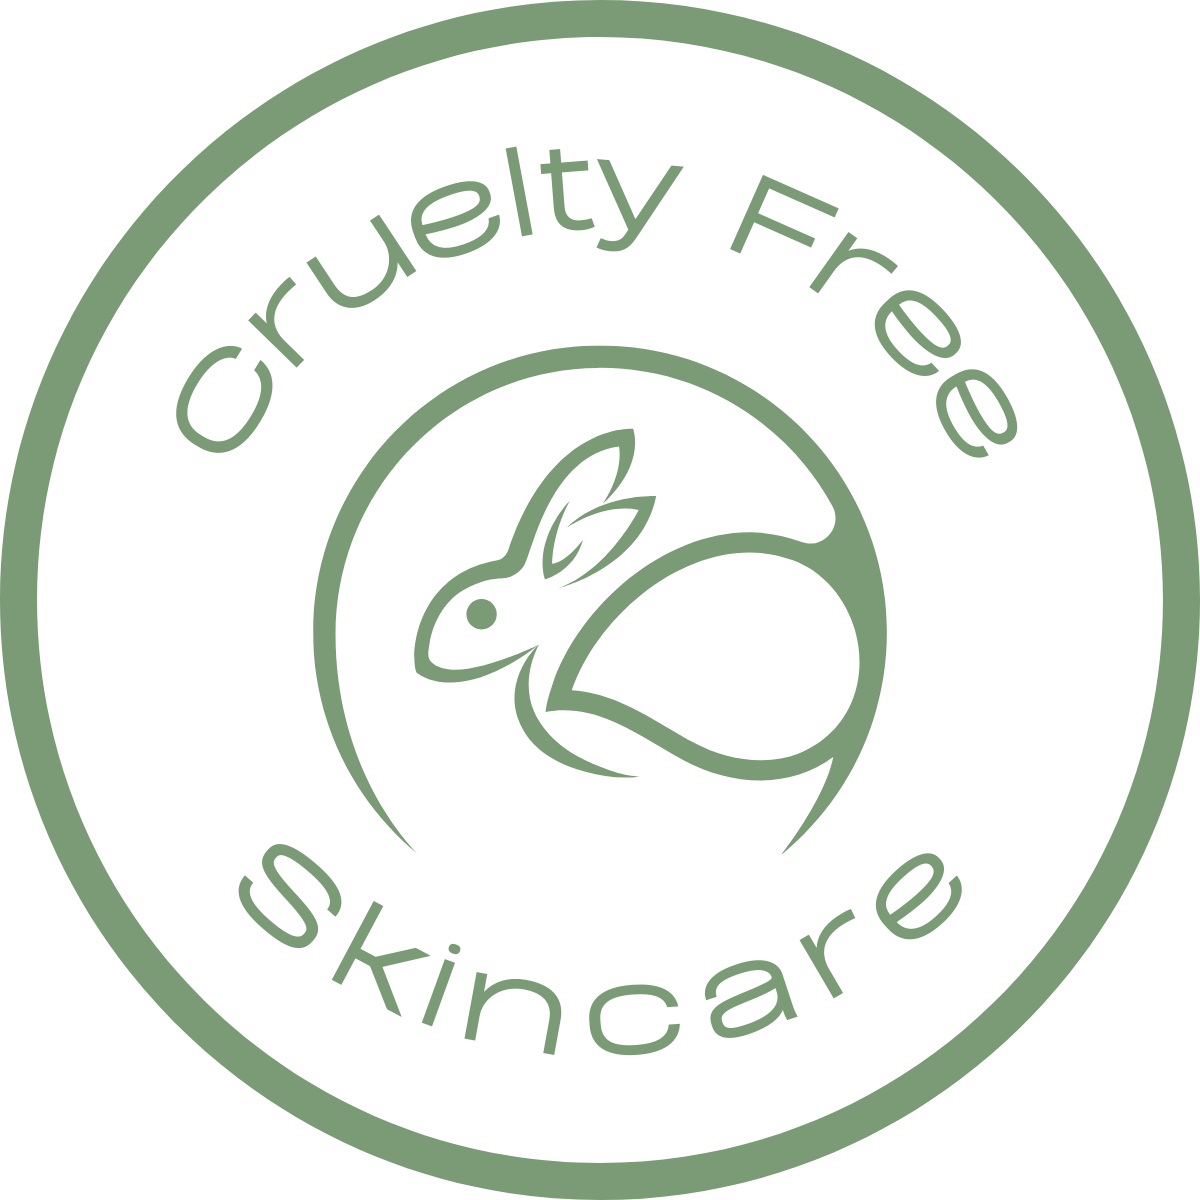 cruelty free skincare